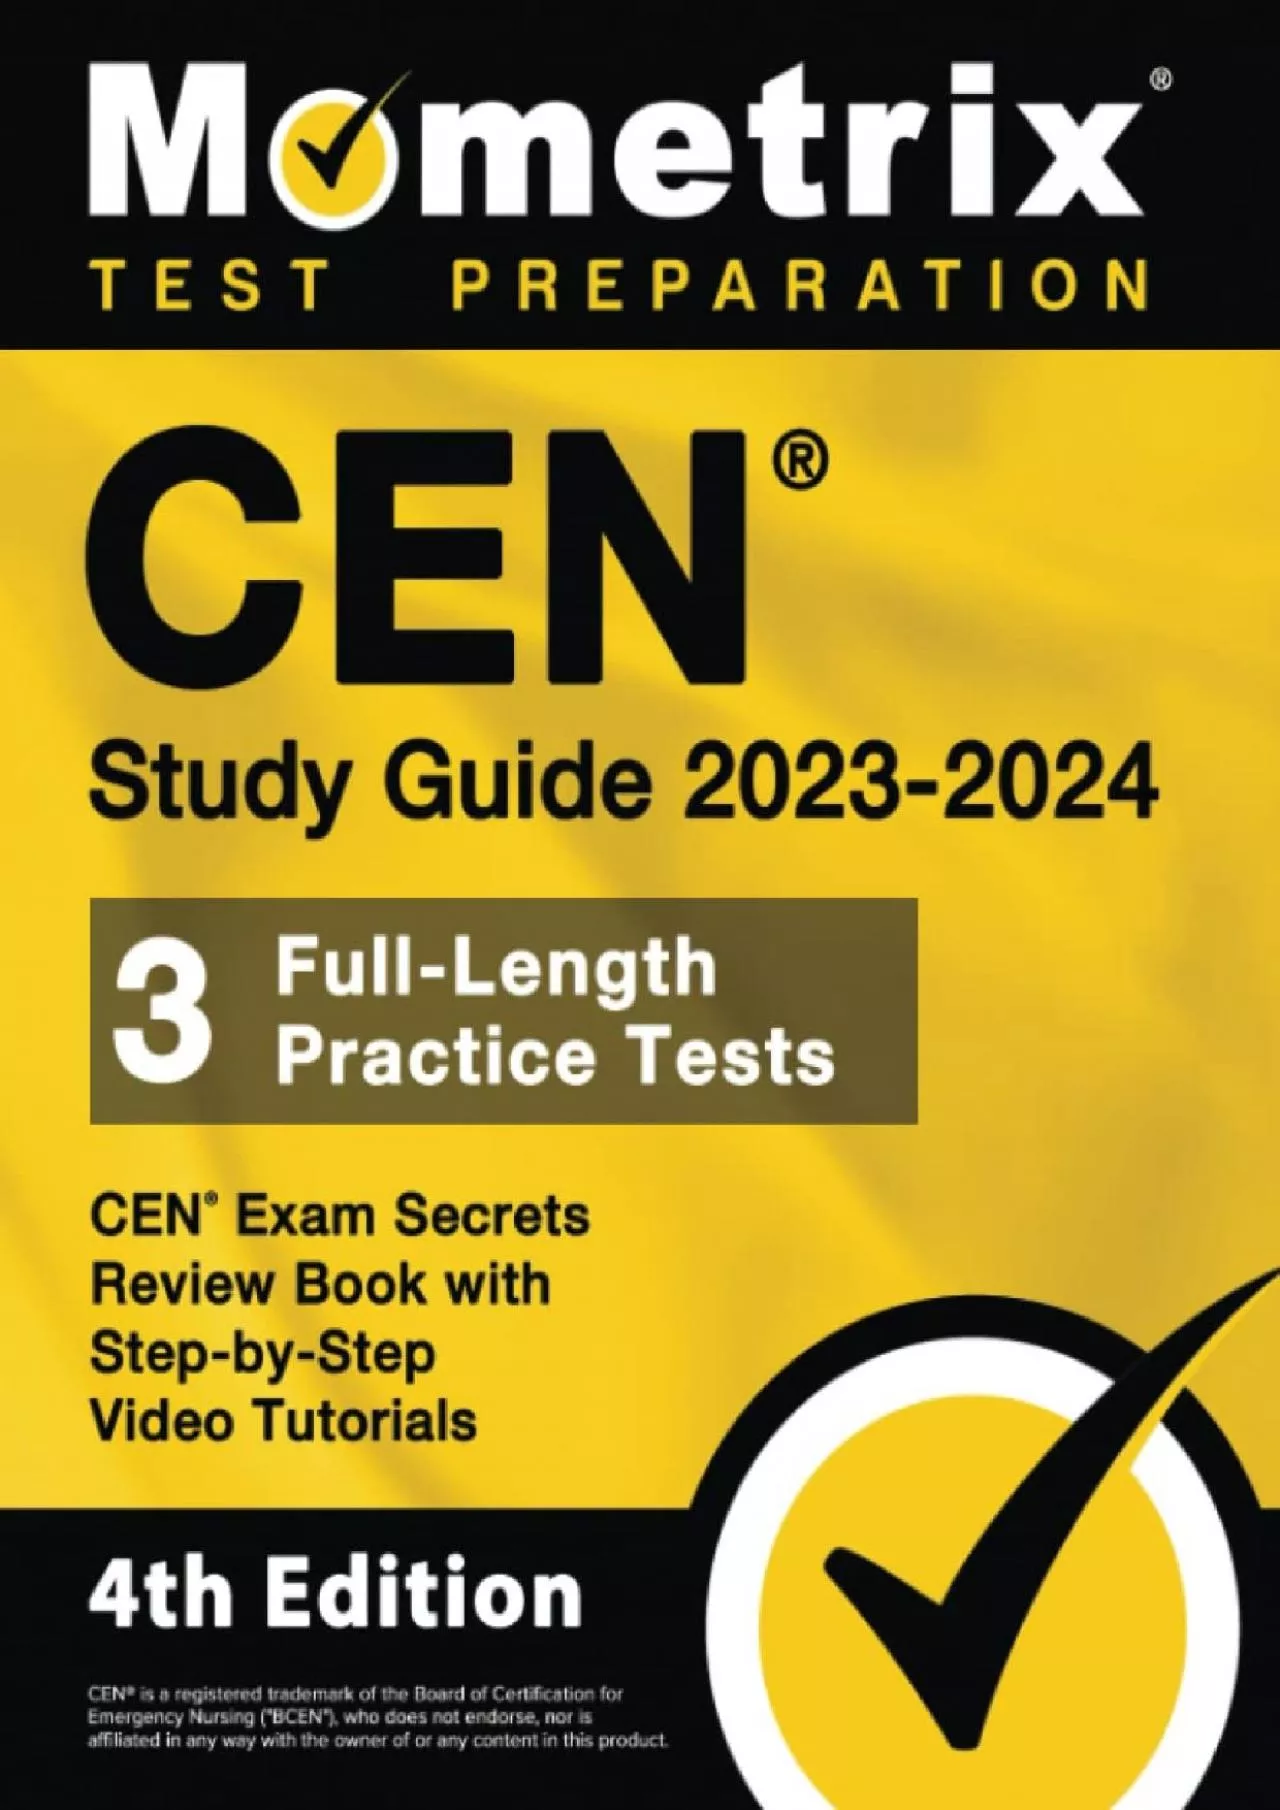 [EBOOK] CEN Study Guide 2023-2024 - CEN Exam Secrets Review Book, Full-Length Practice